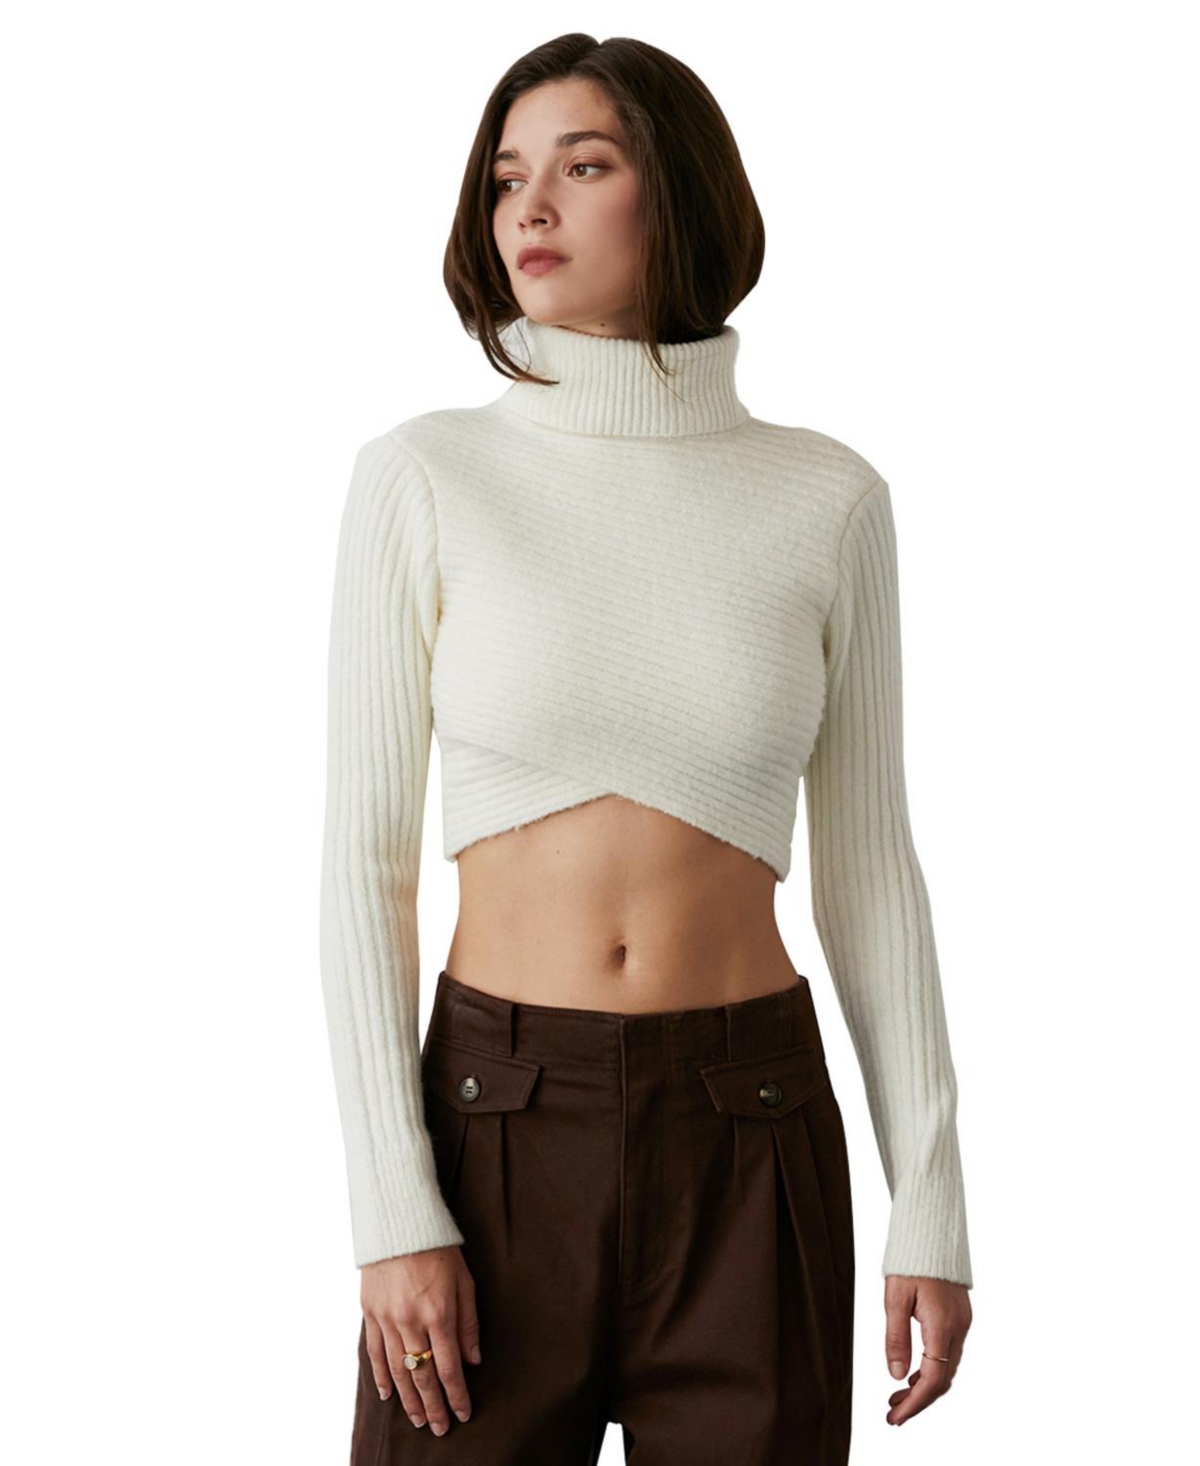 Women's Emery Criss-Cross Crop Sweater - Open white + cream